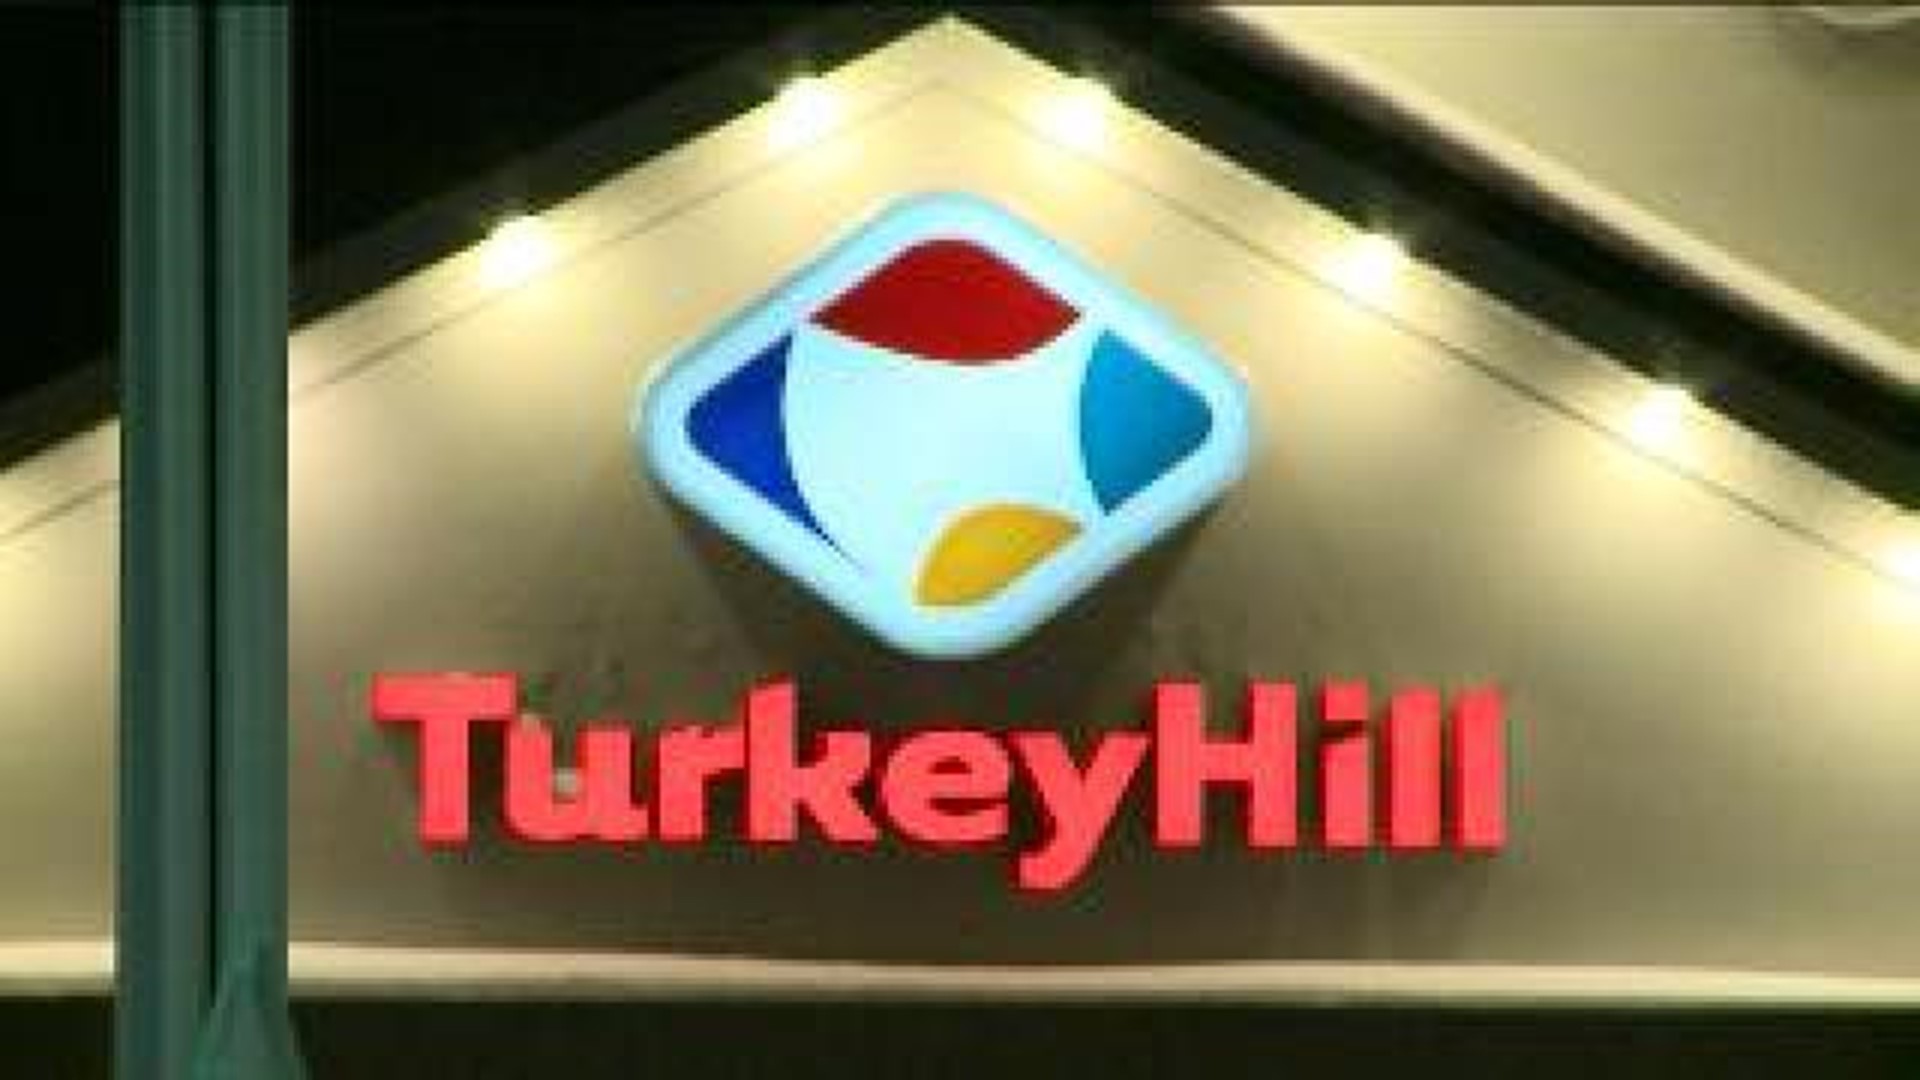 Robber Hits Turkey Hill in Hazleton